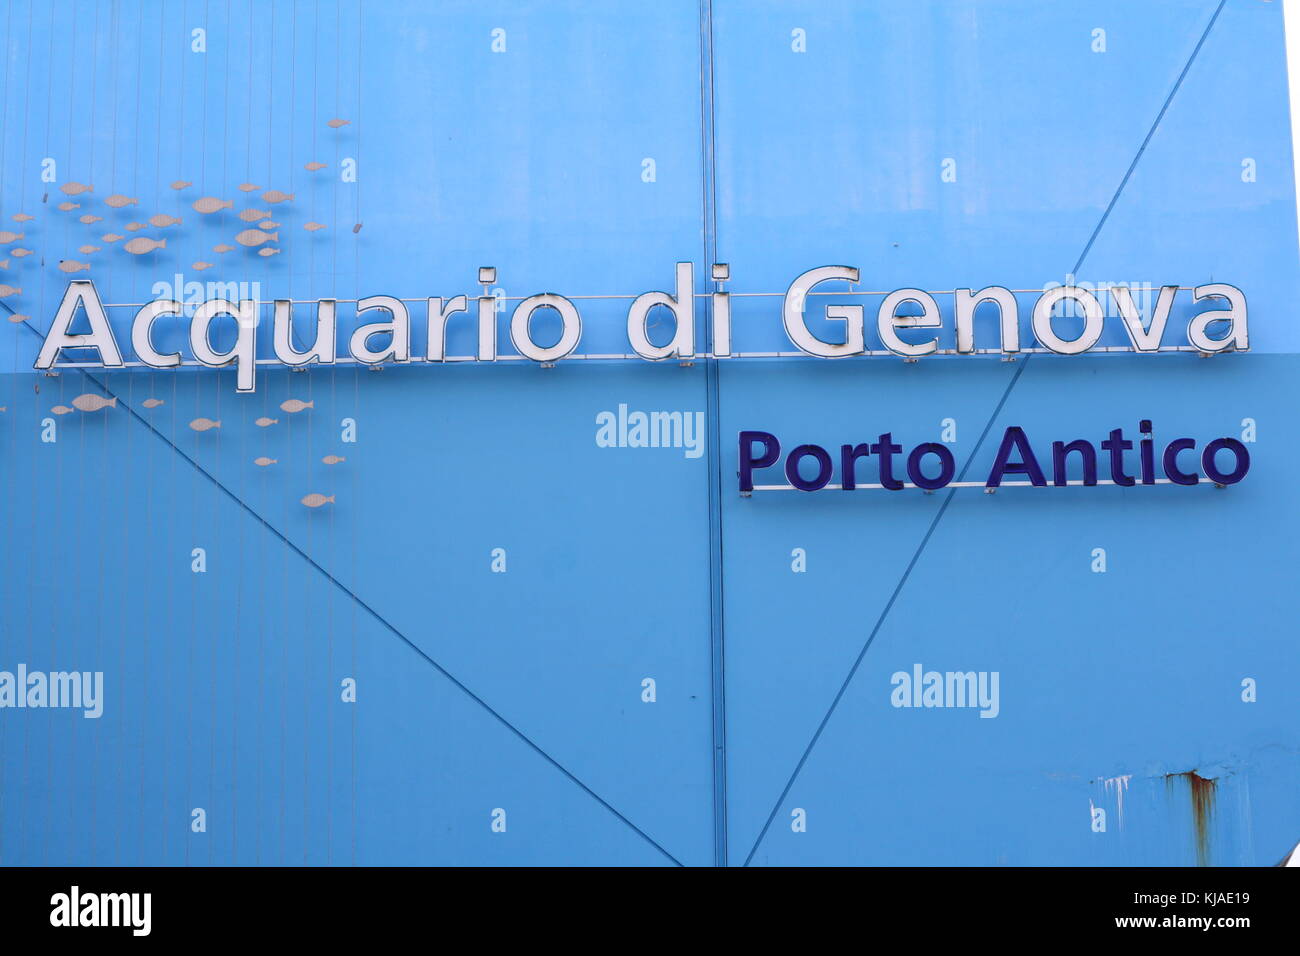 L'Acquario di Genova à Porto Antico building signe. Banque D'Images